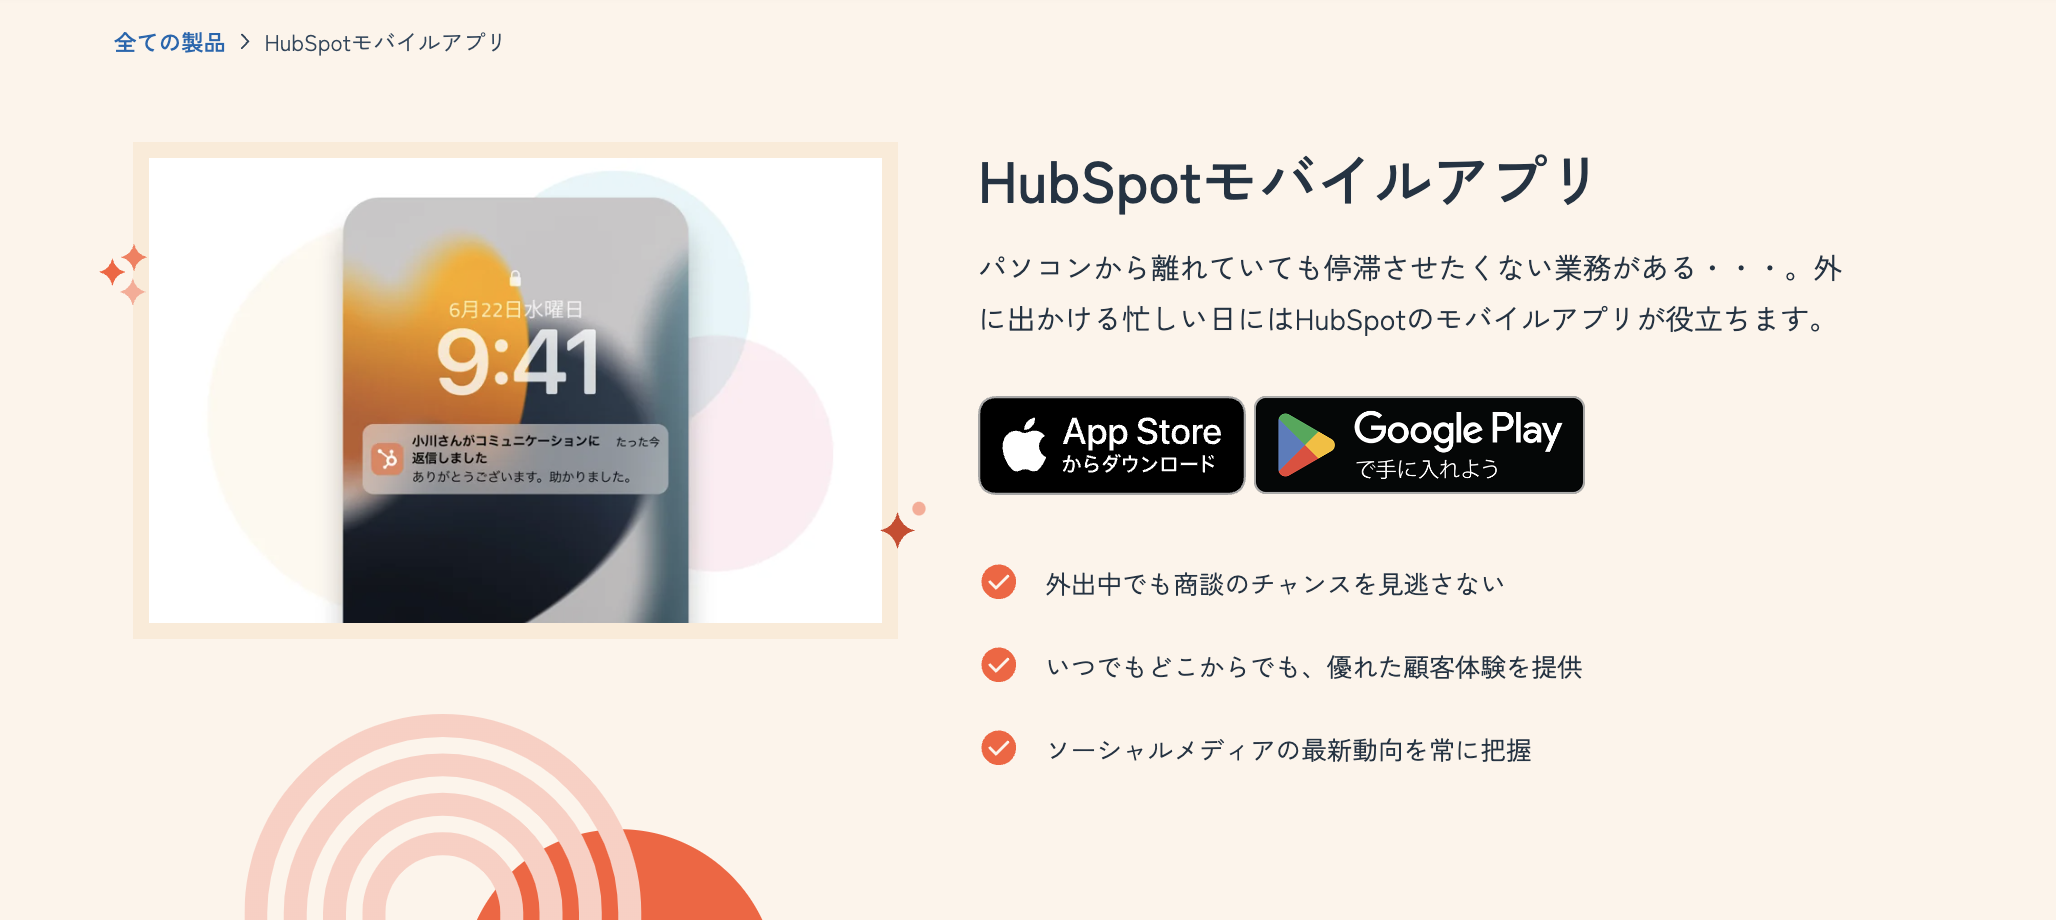 HubSpot モバイルアプリ